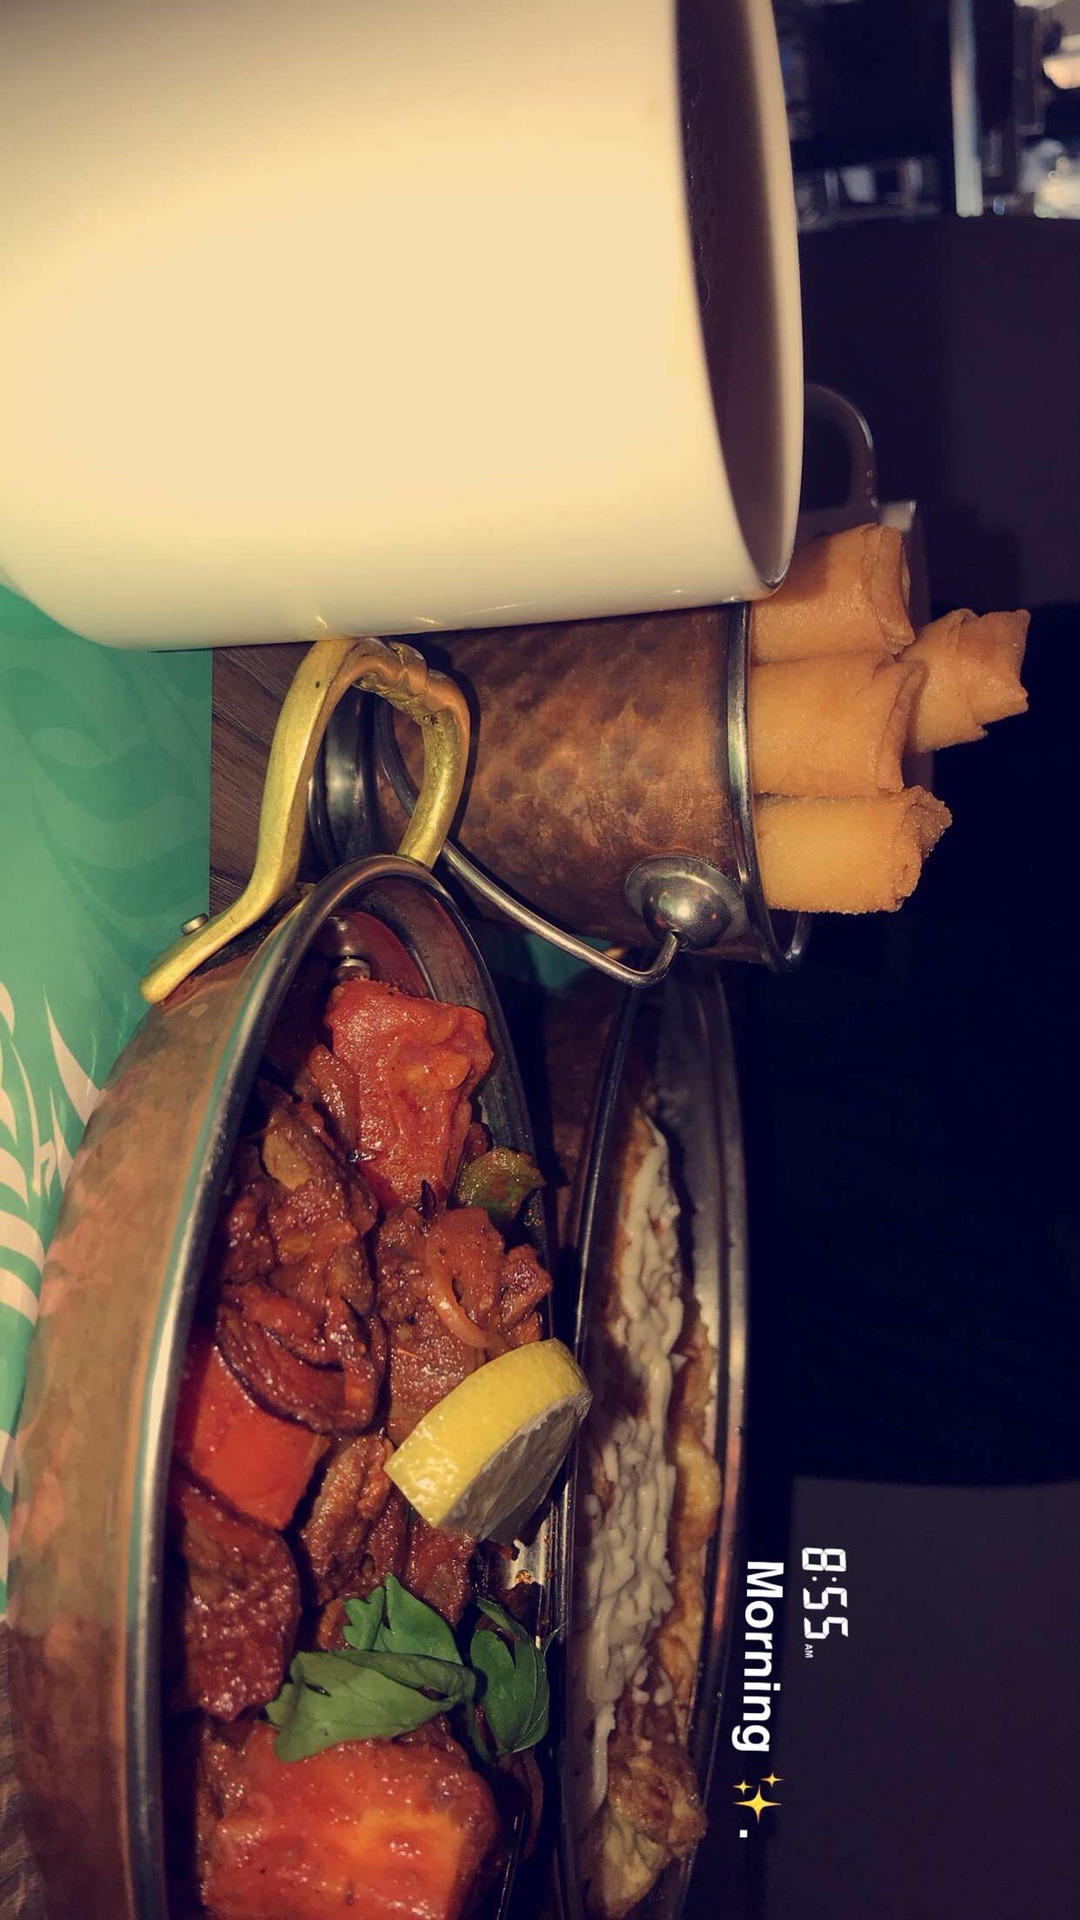 لذيذ😍😍💕 @ Al Ameer Restaurant - Bahrain